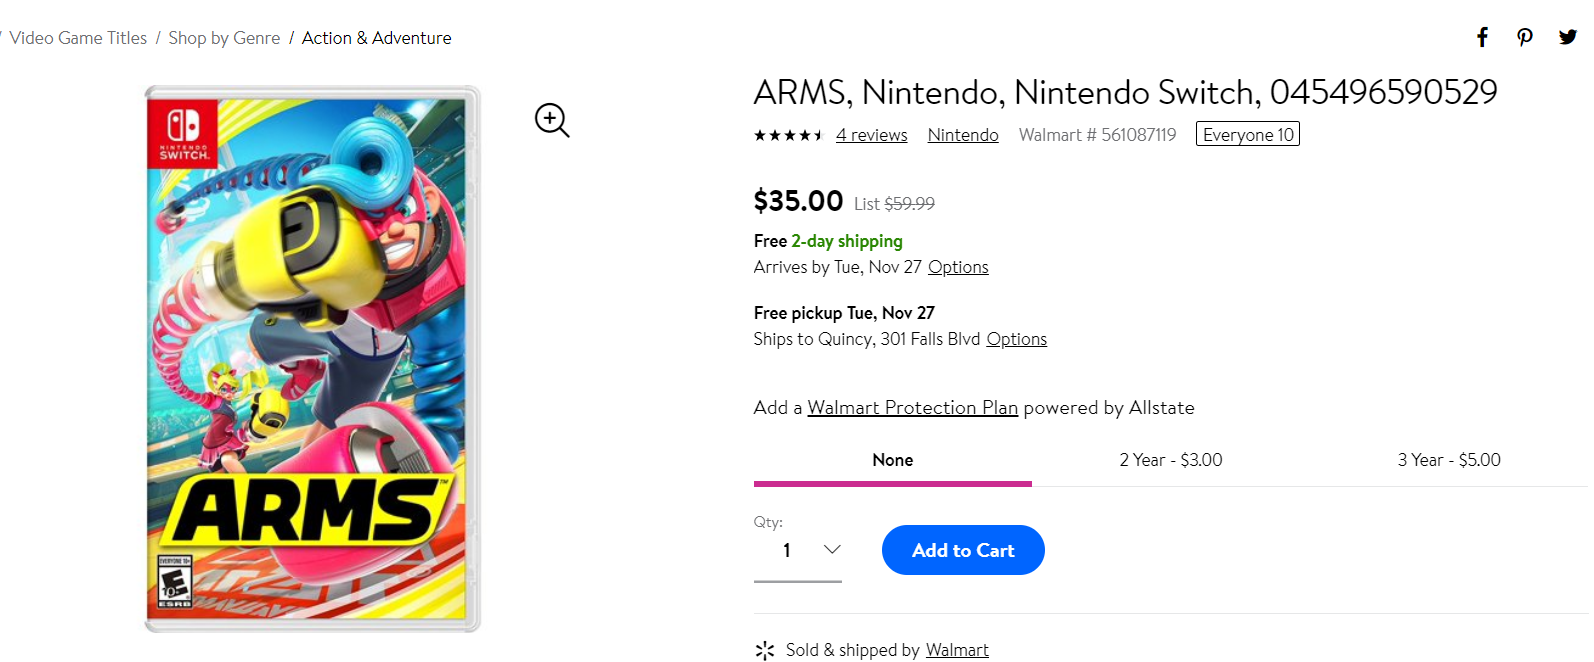 ARMS, Nintendo, Nintendo Switch, 045496590529 - 黑五提早开卖